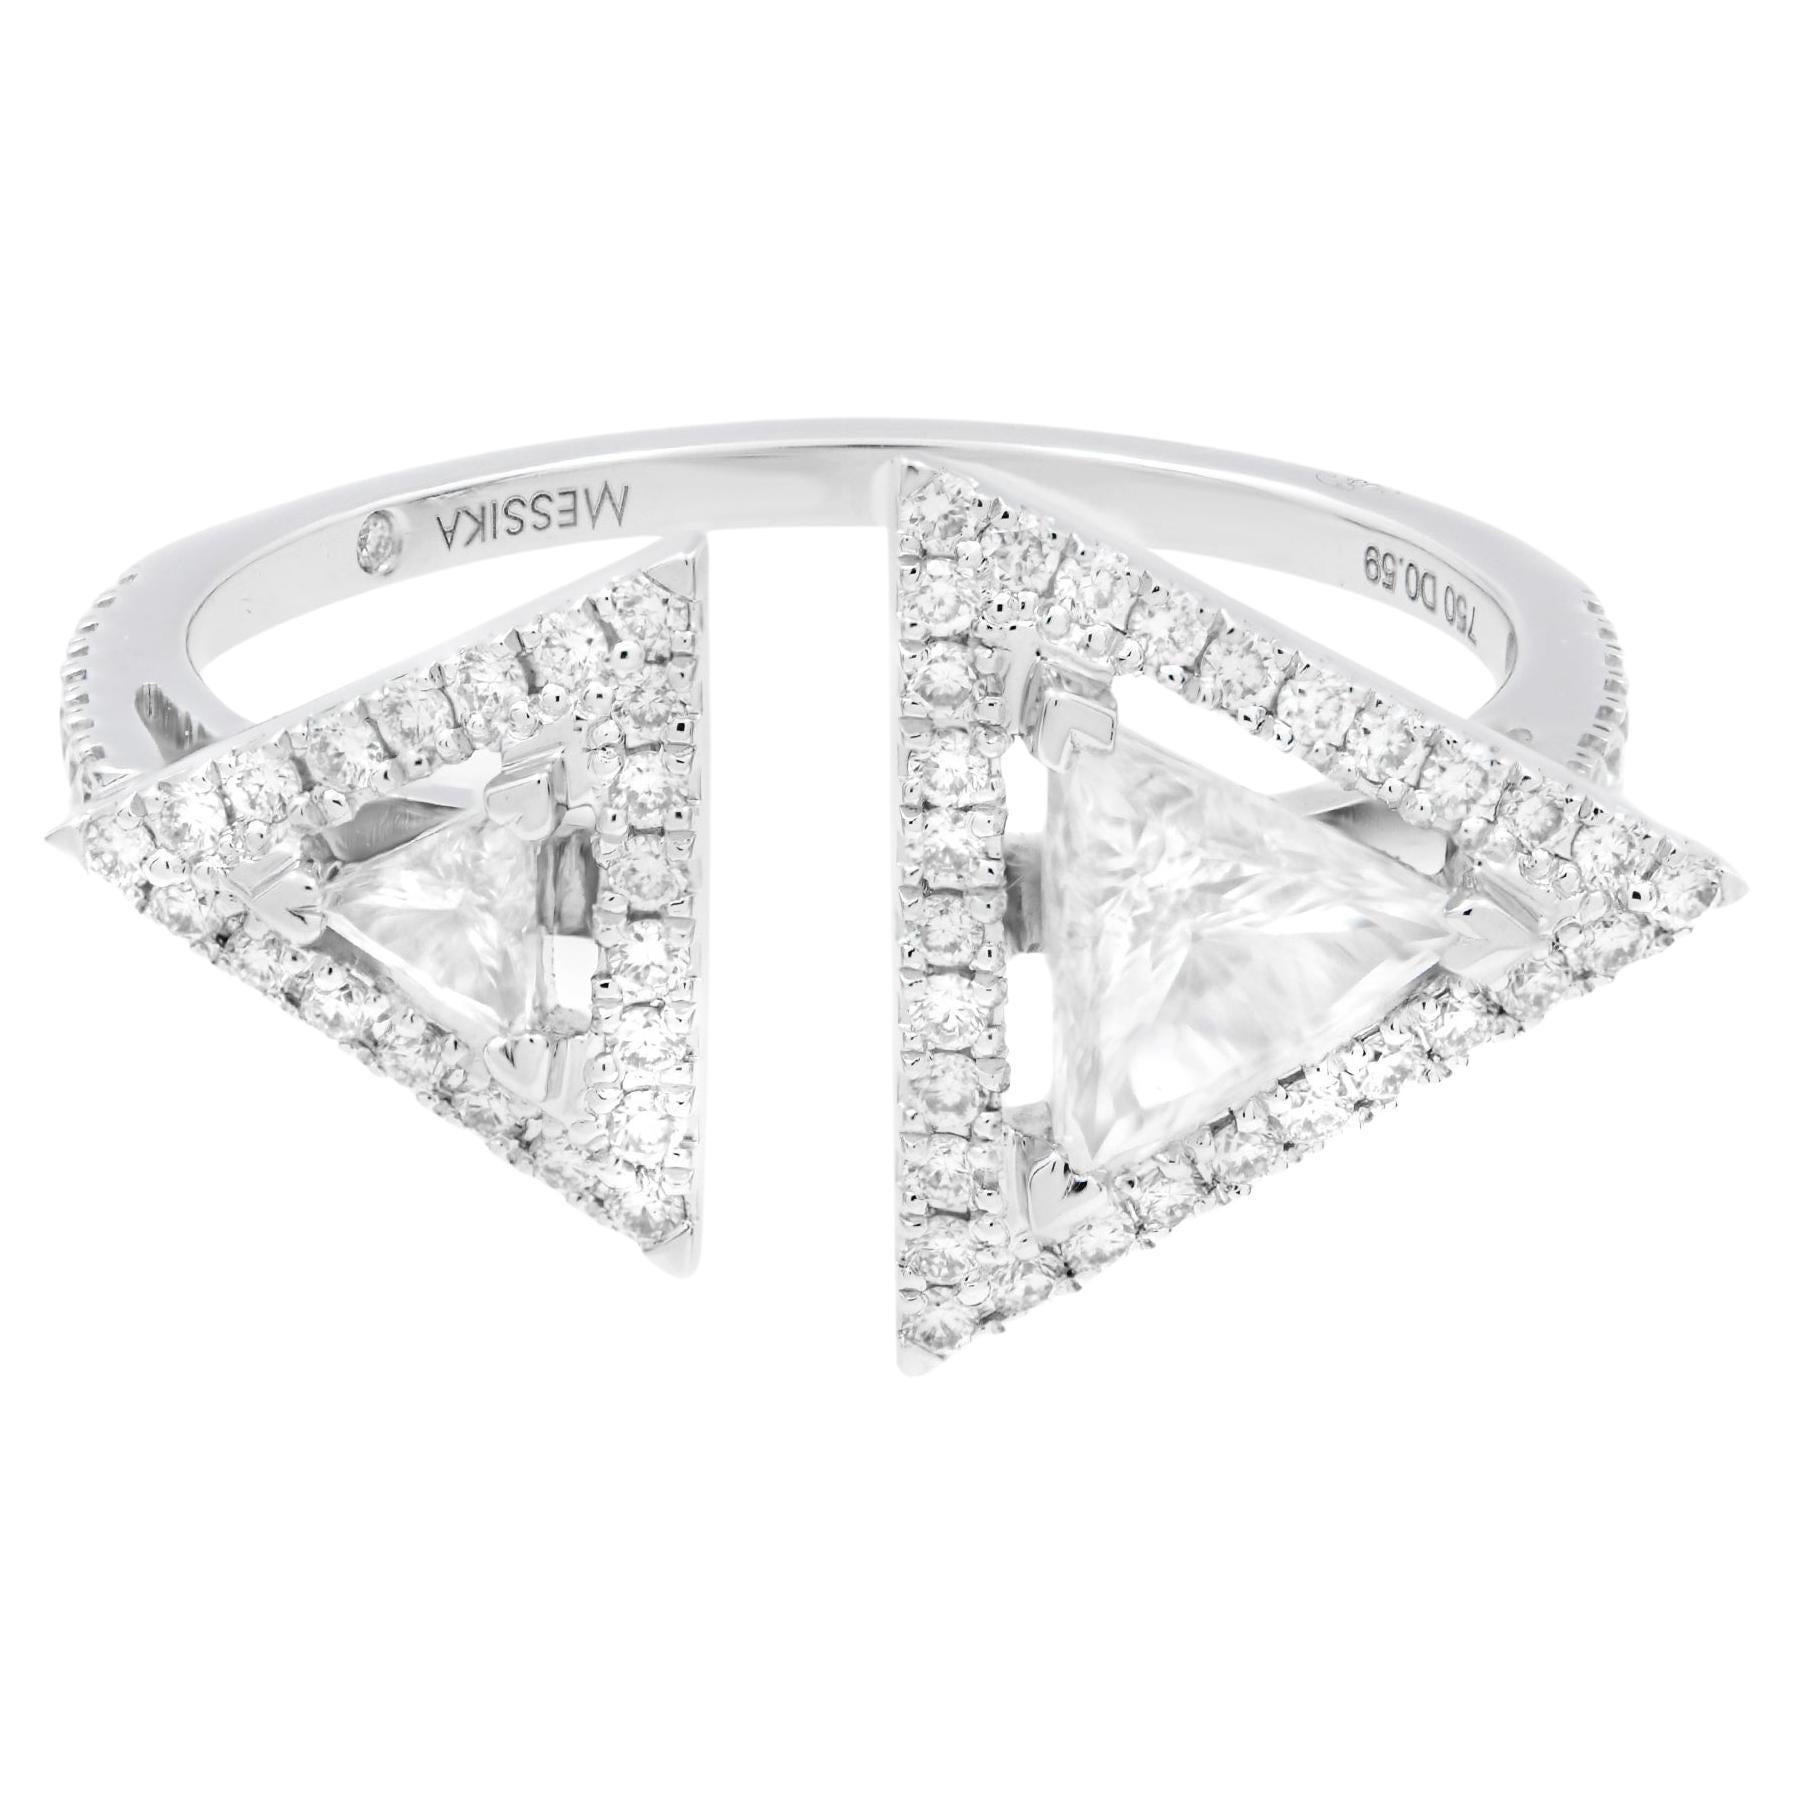 Messika Bague Thea Toi & Moi en or blanc 18 carats avec diamants 0,35 carat poids total